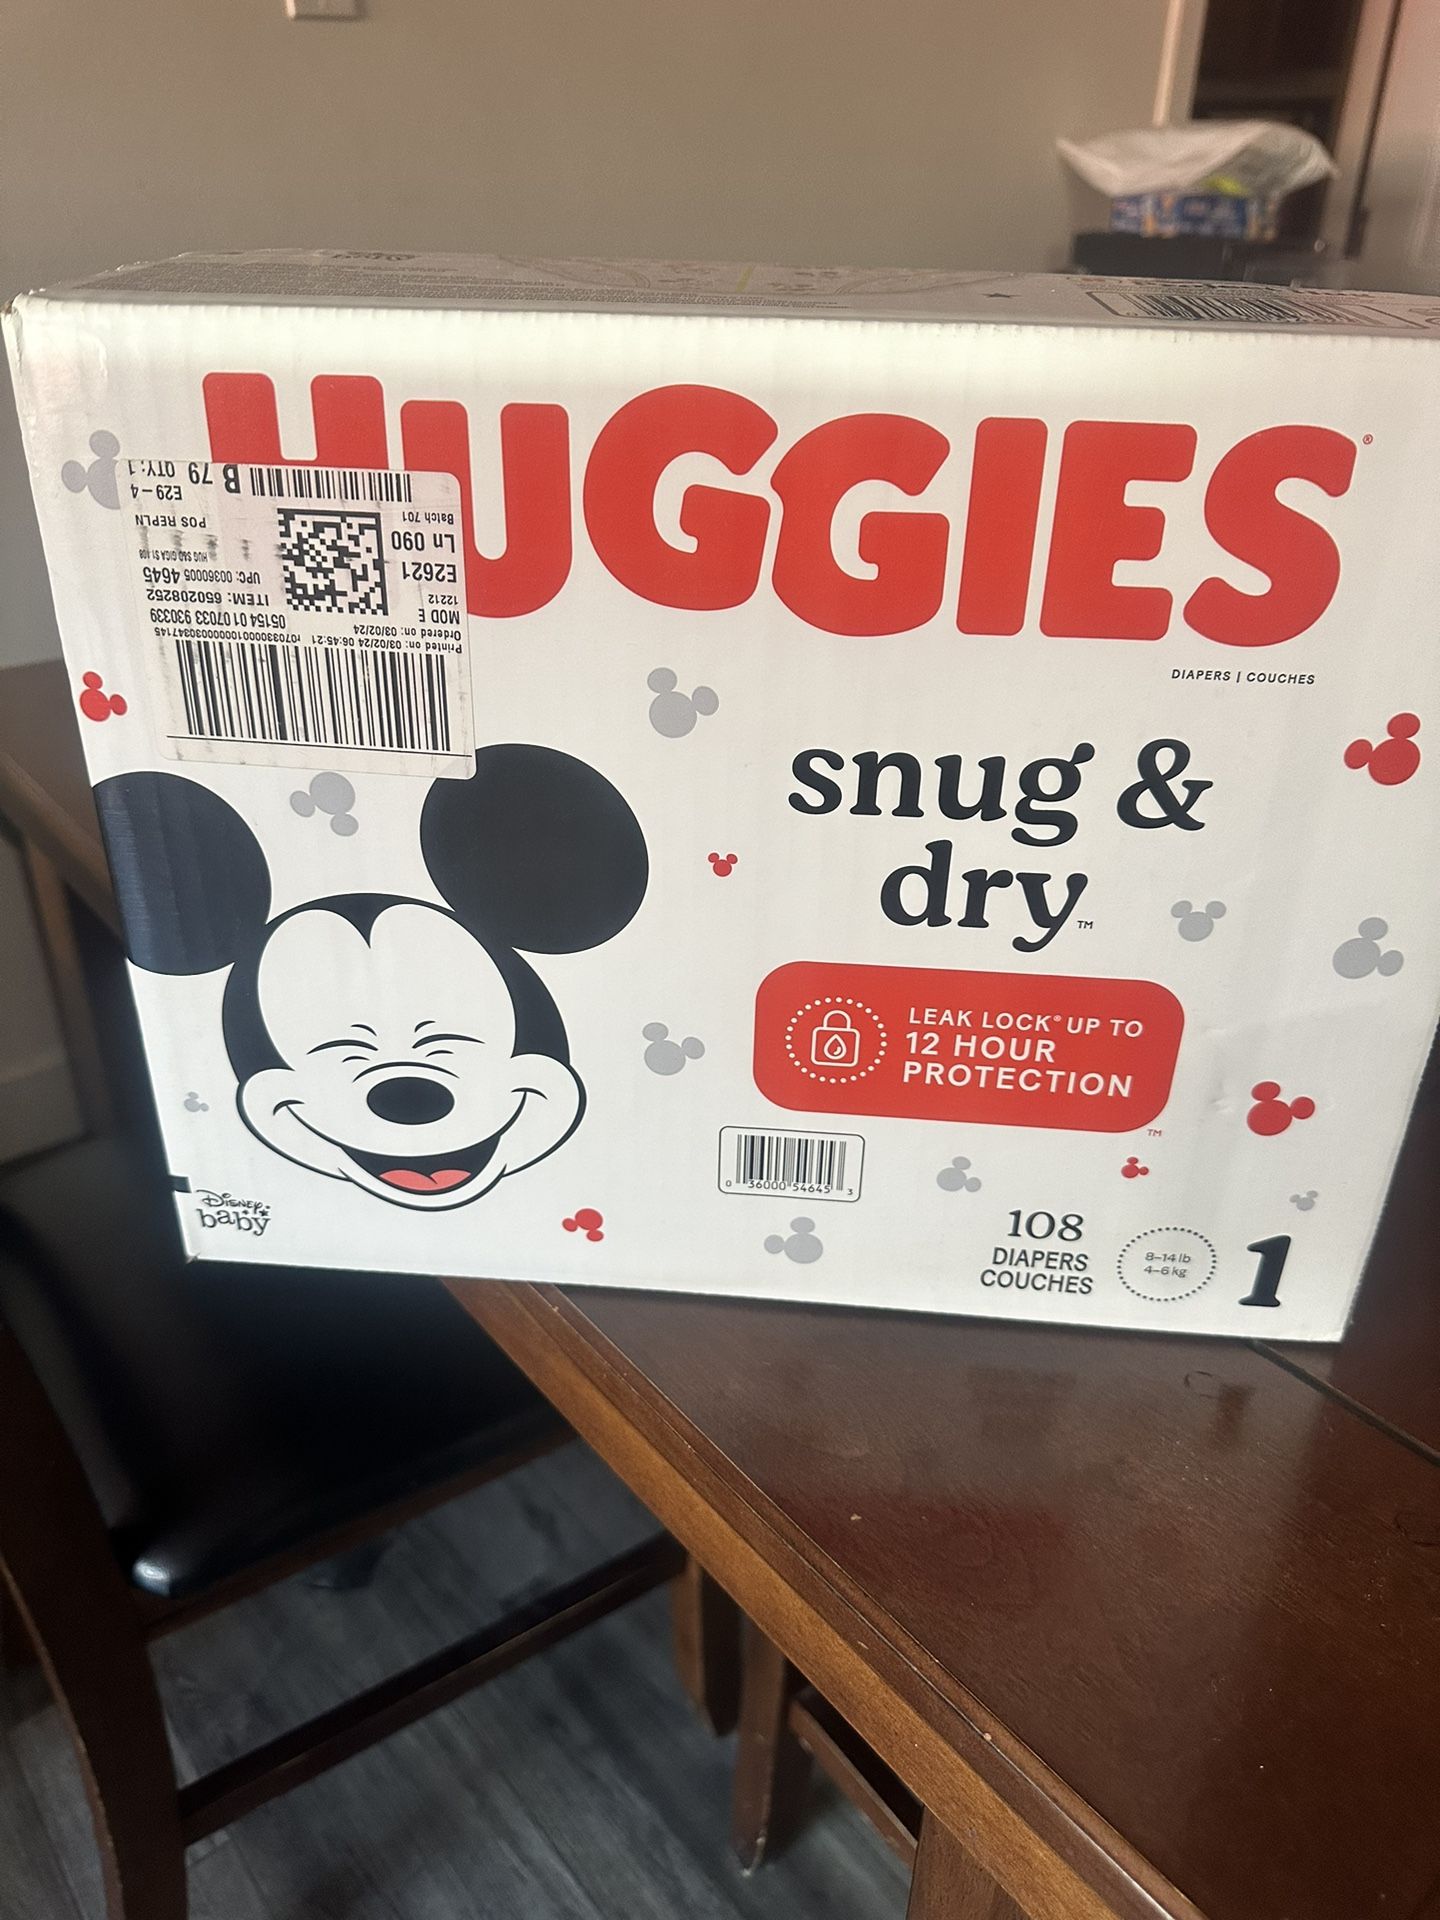 Huggies Diapers Snug&Dry